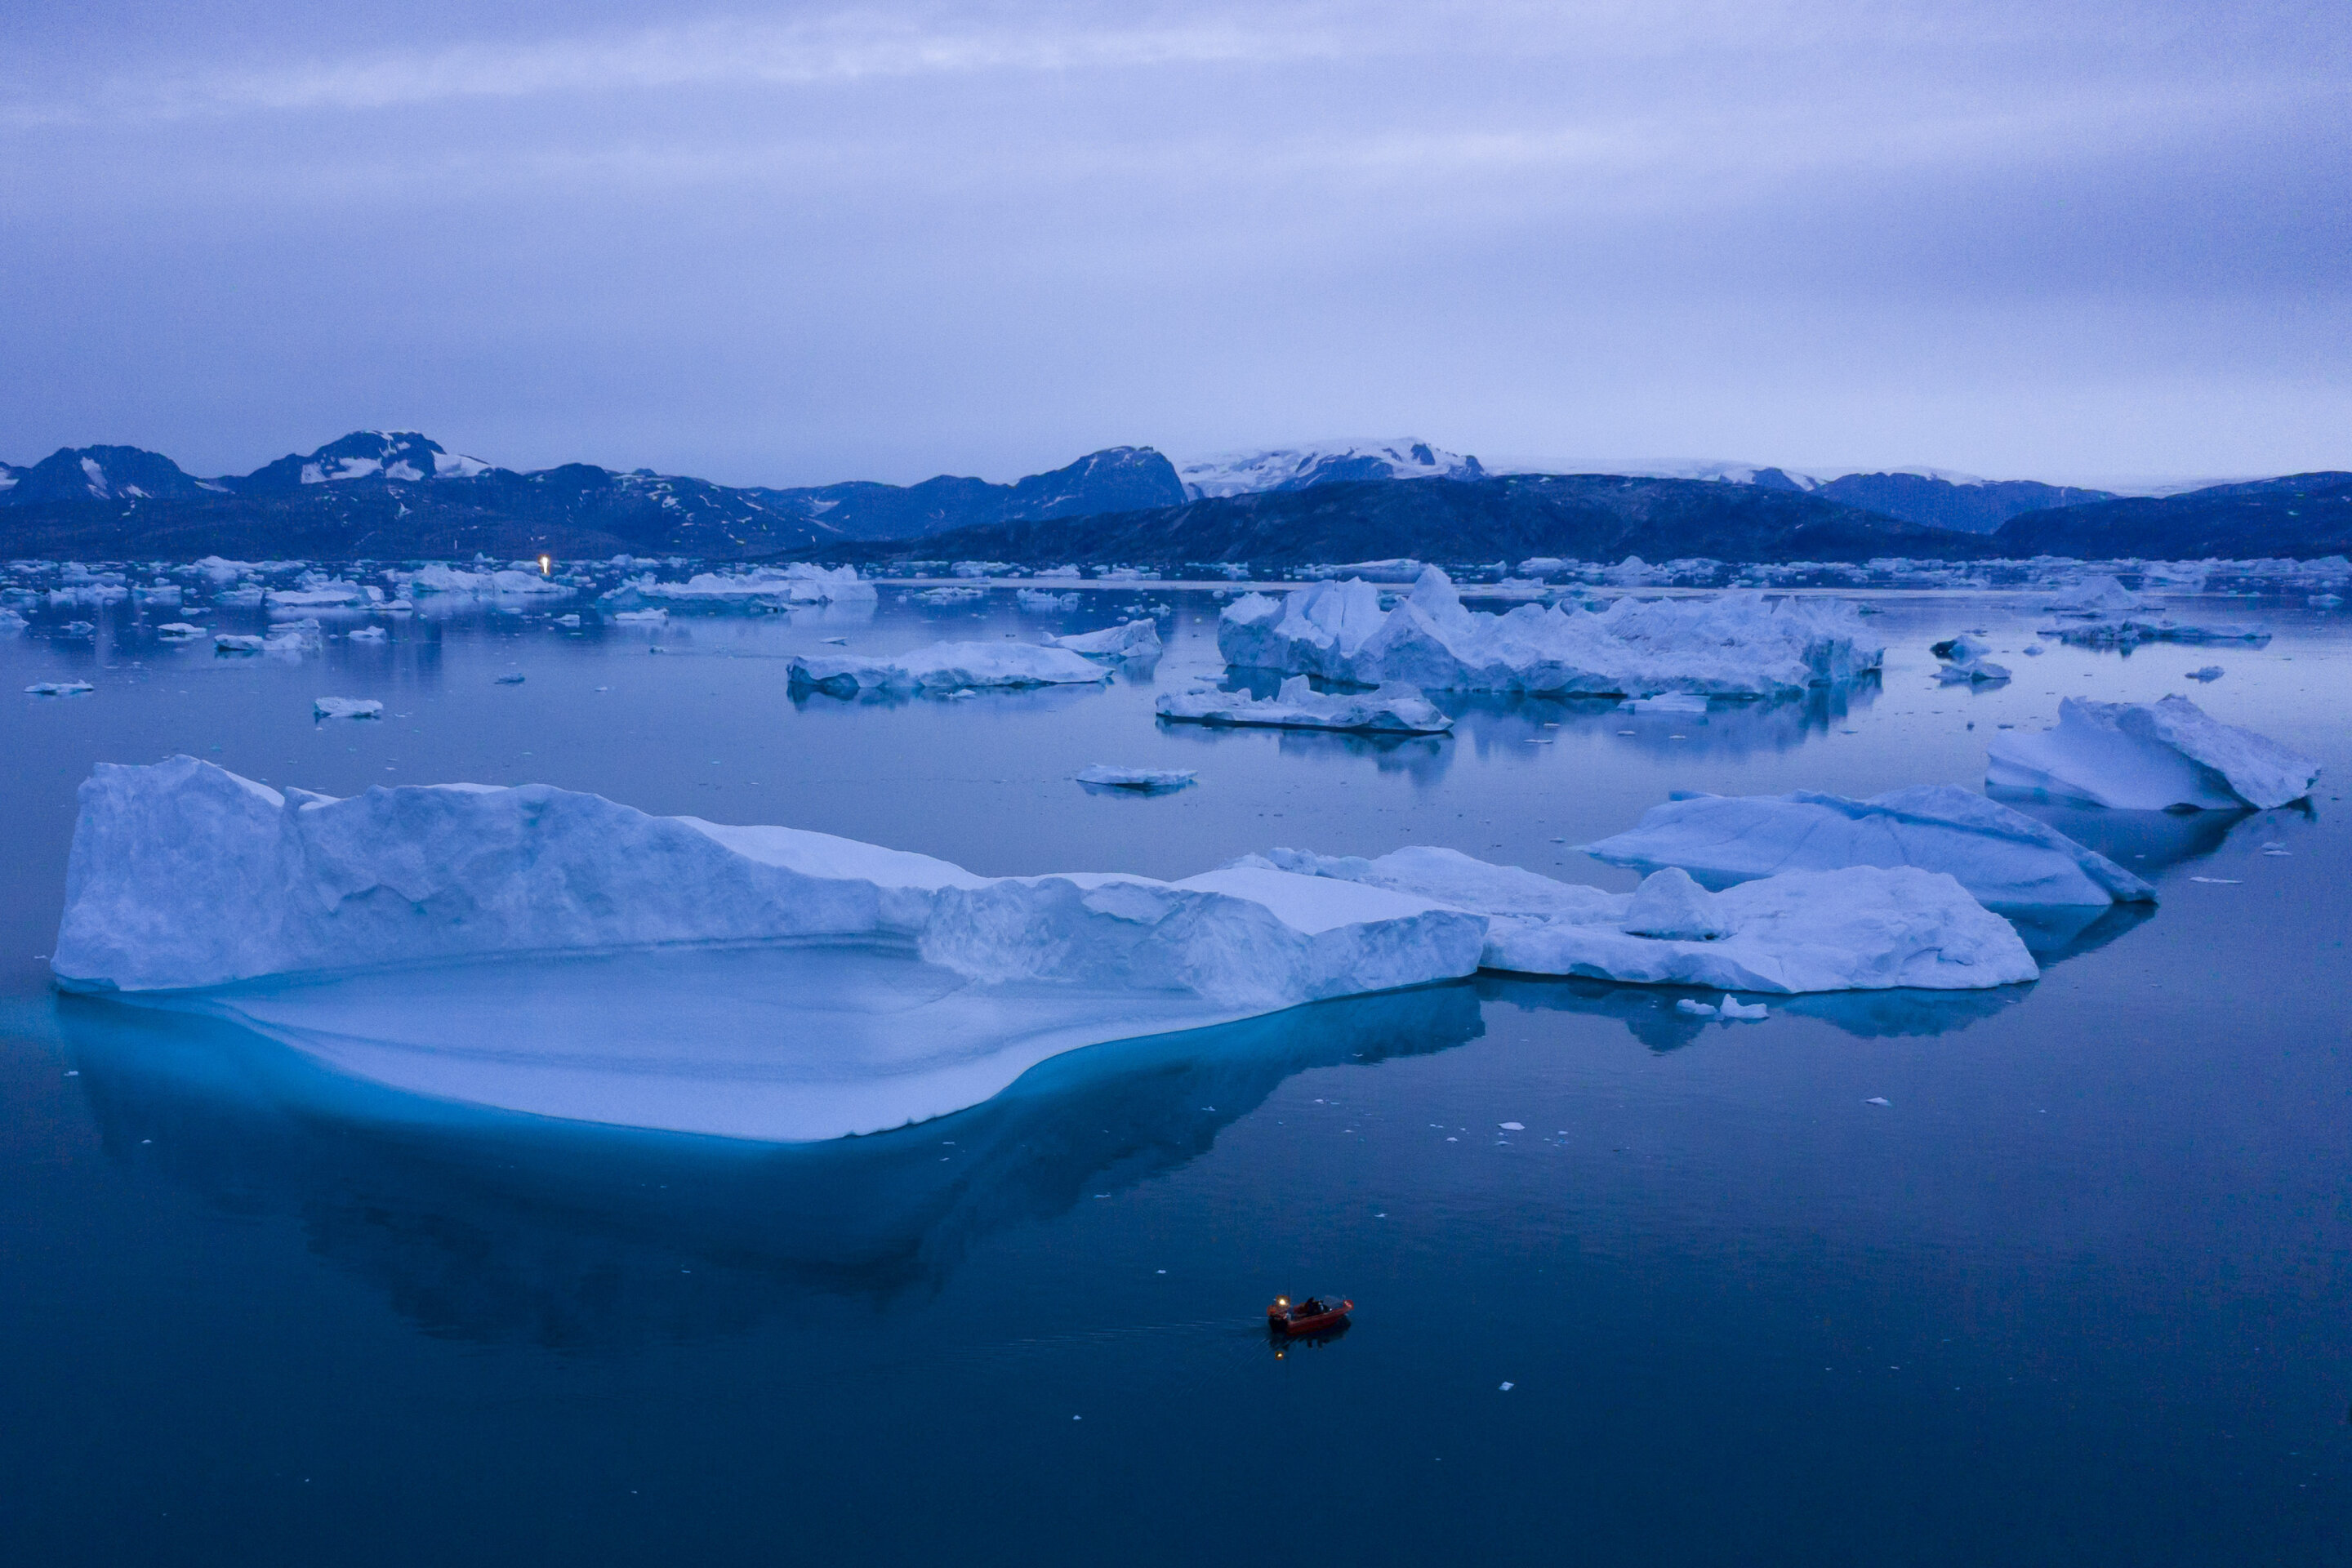 #New ice core analysis shows sharp Greenland warming spike